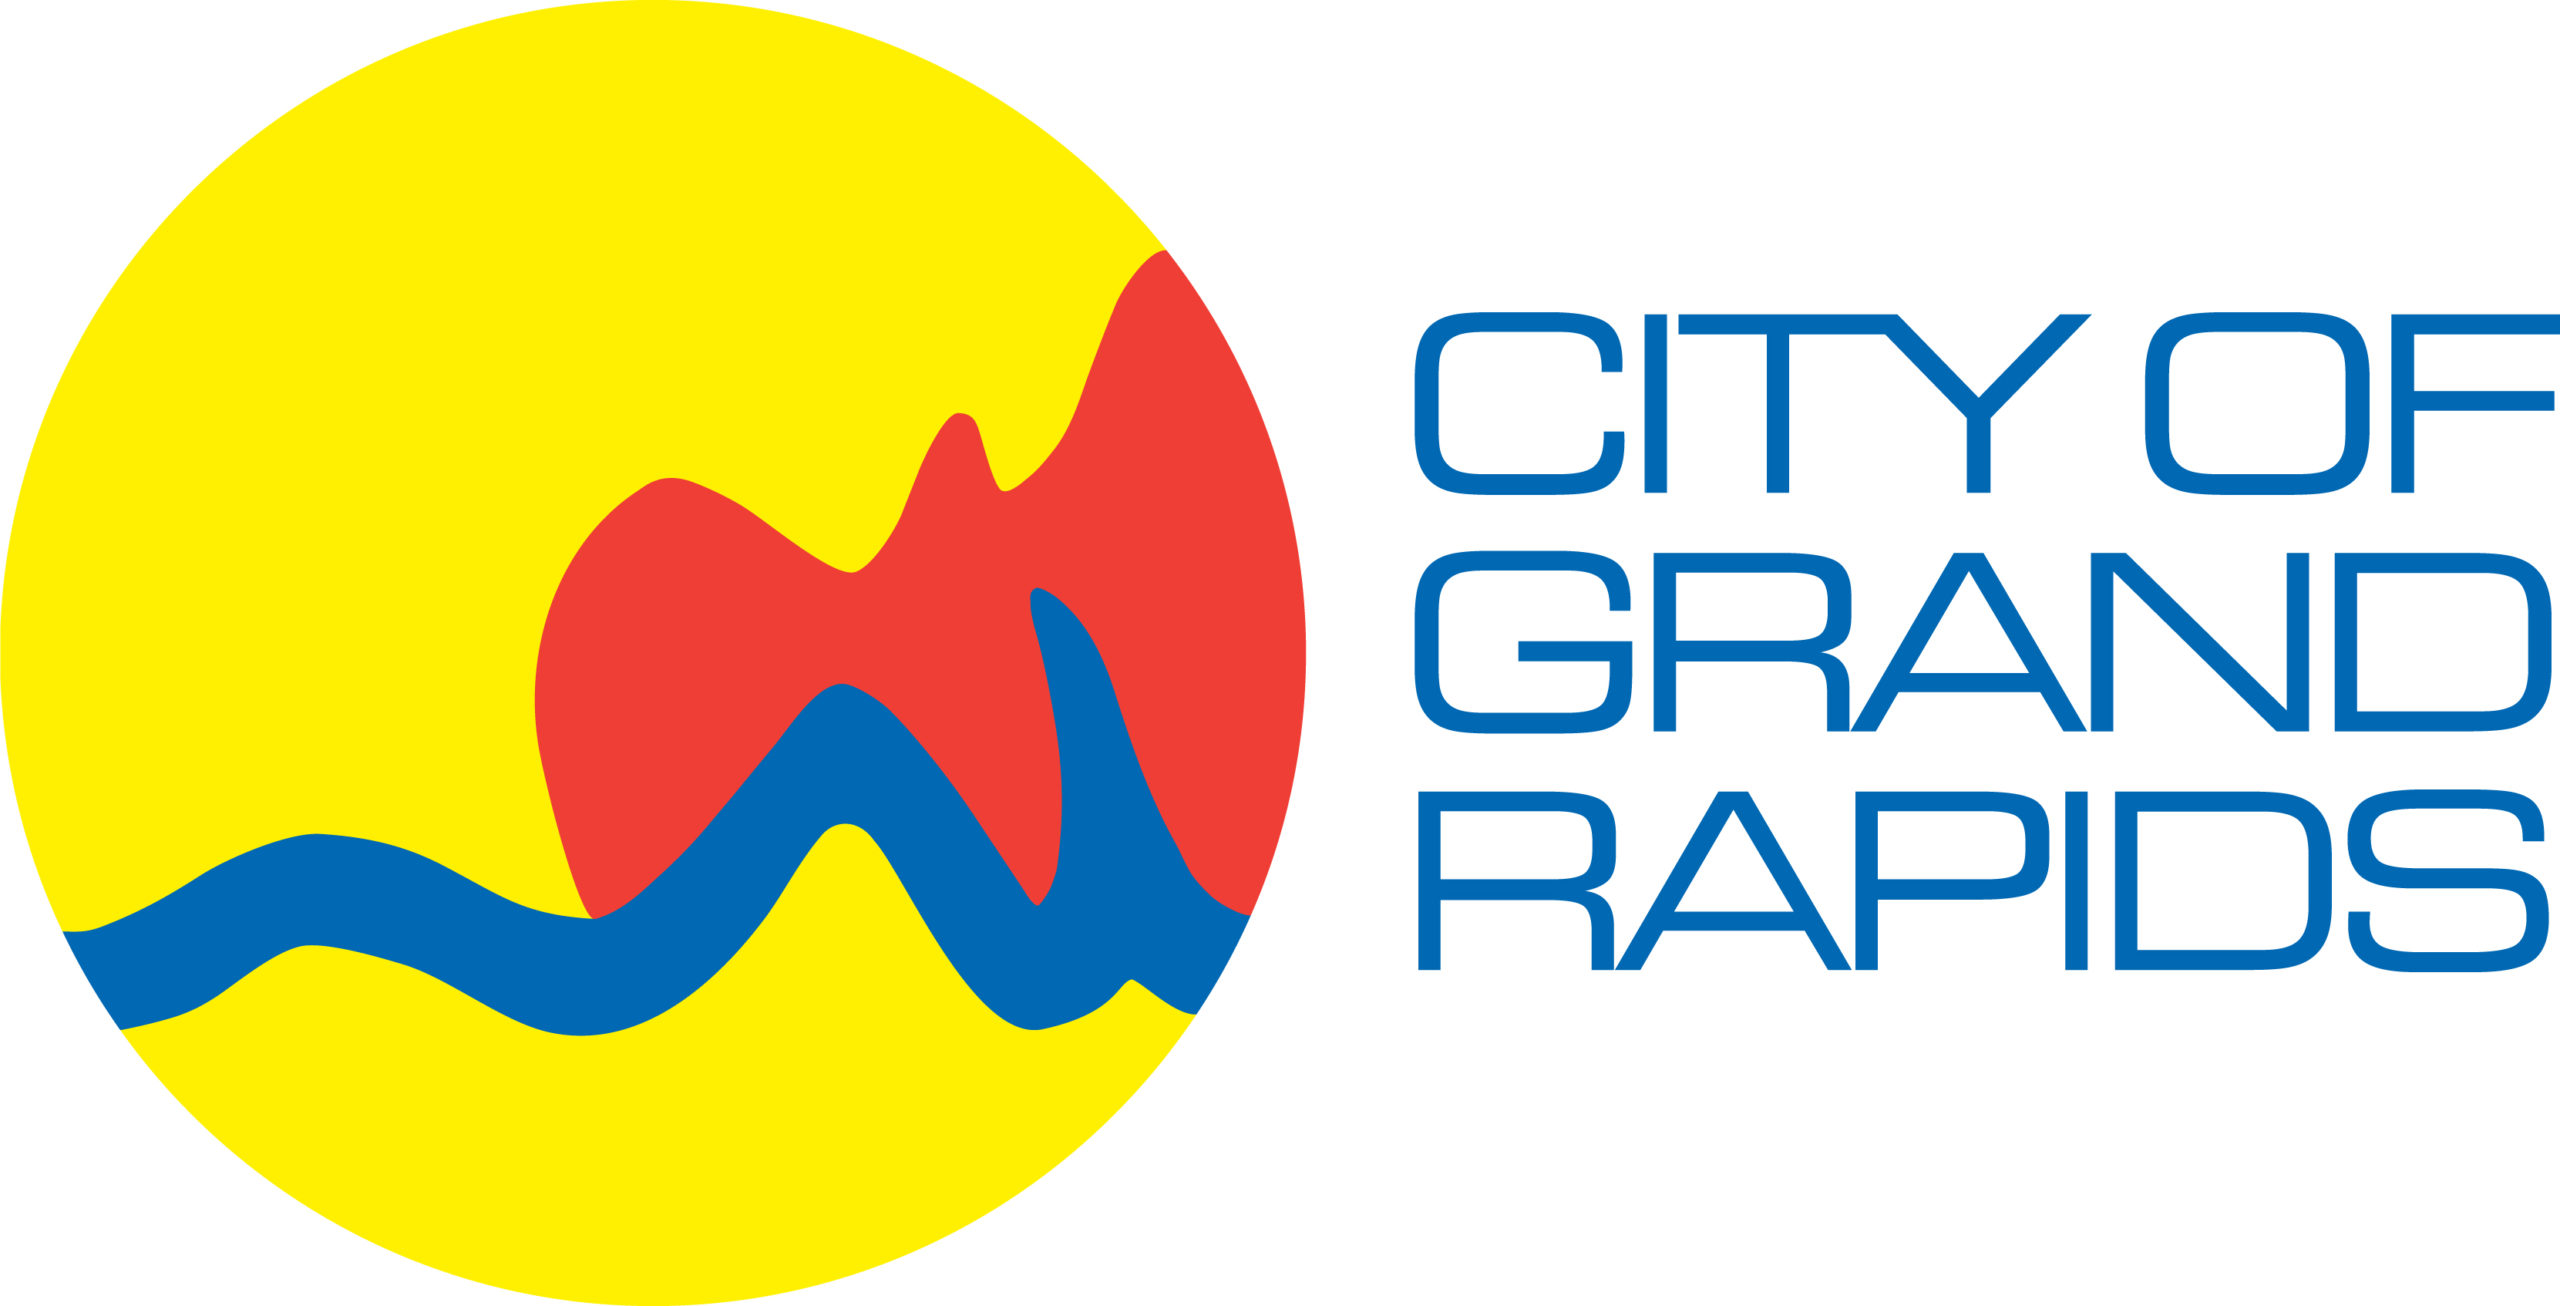 City of Grand Rapids